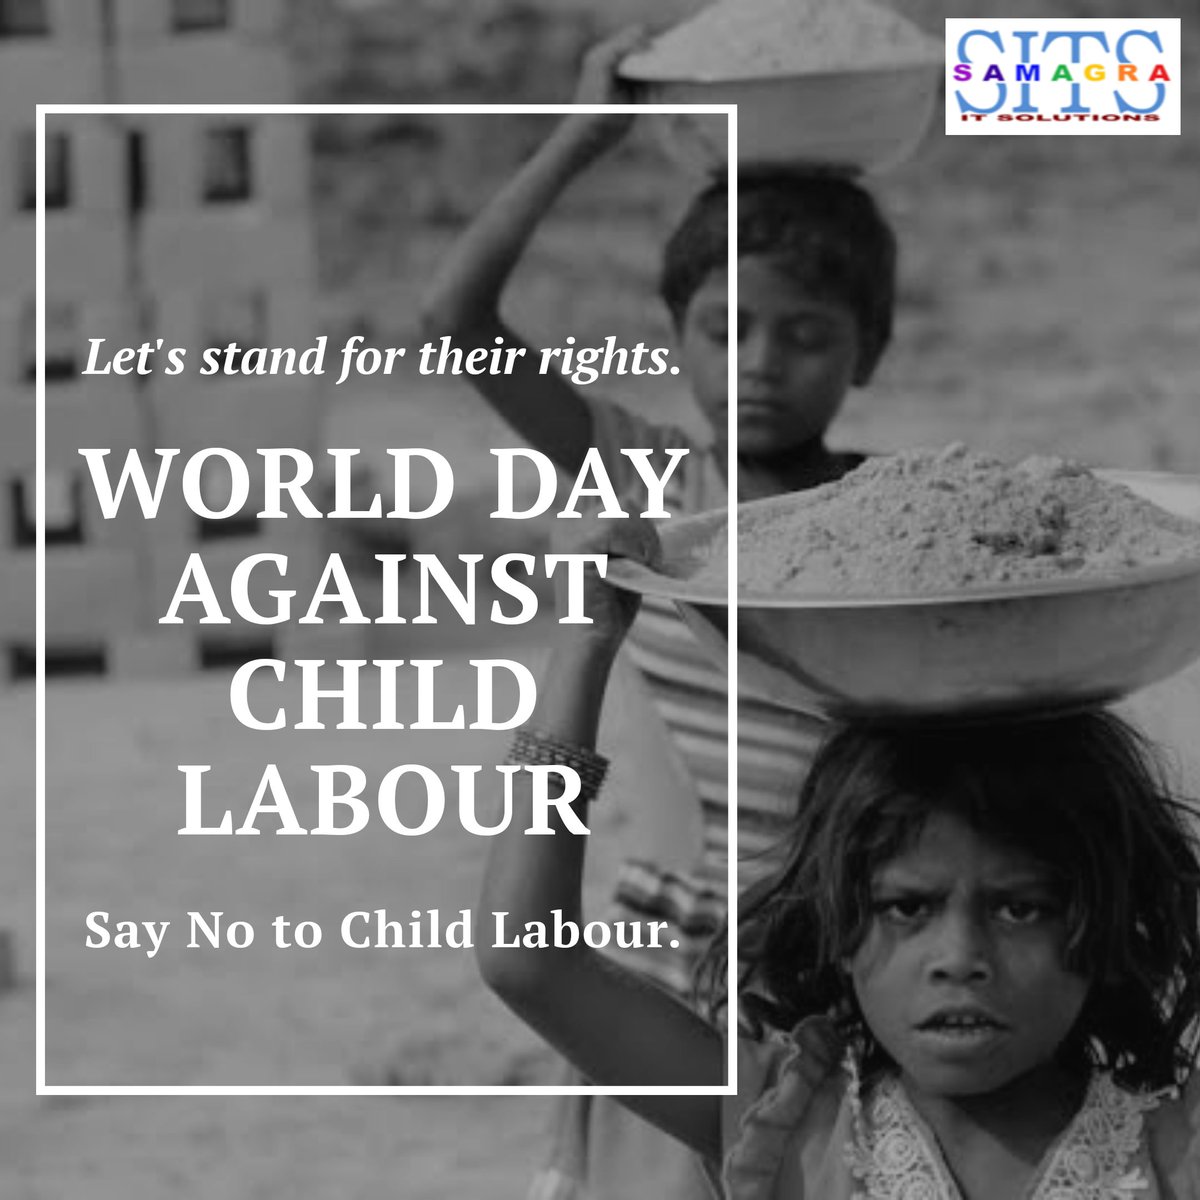 #WorldDayAgainstChildLabour #WorldDayAgainstChildLabour2020 #childlabour #childlabourday #COVID19Pandemic #EconomicCrisis #rights